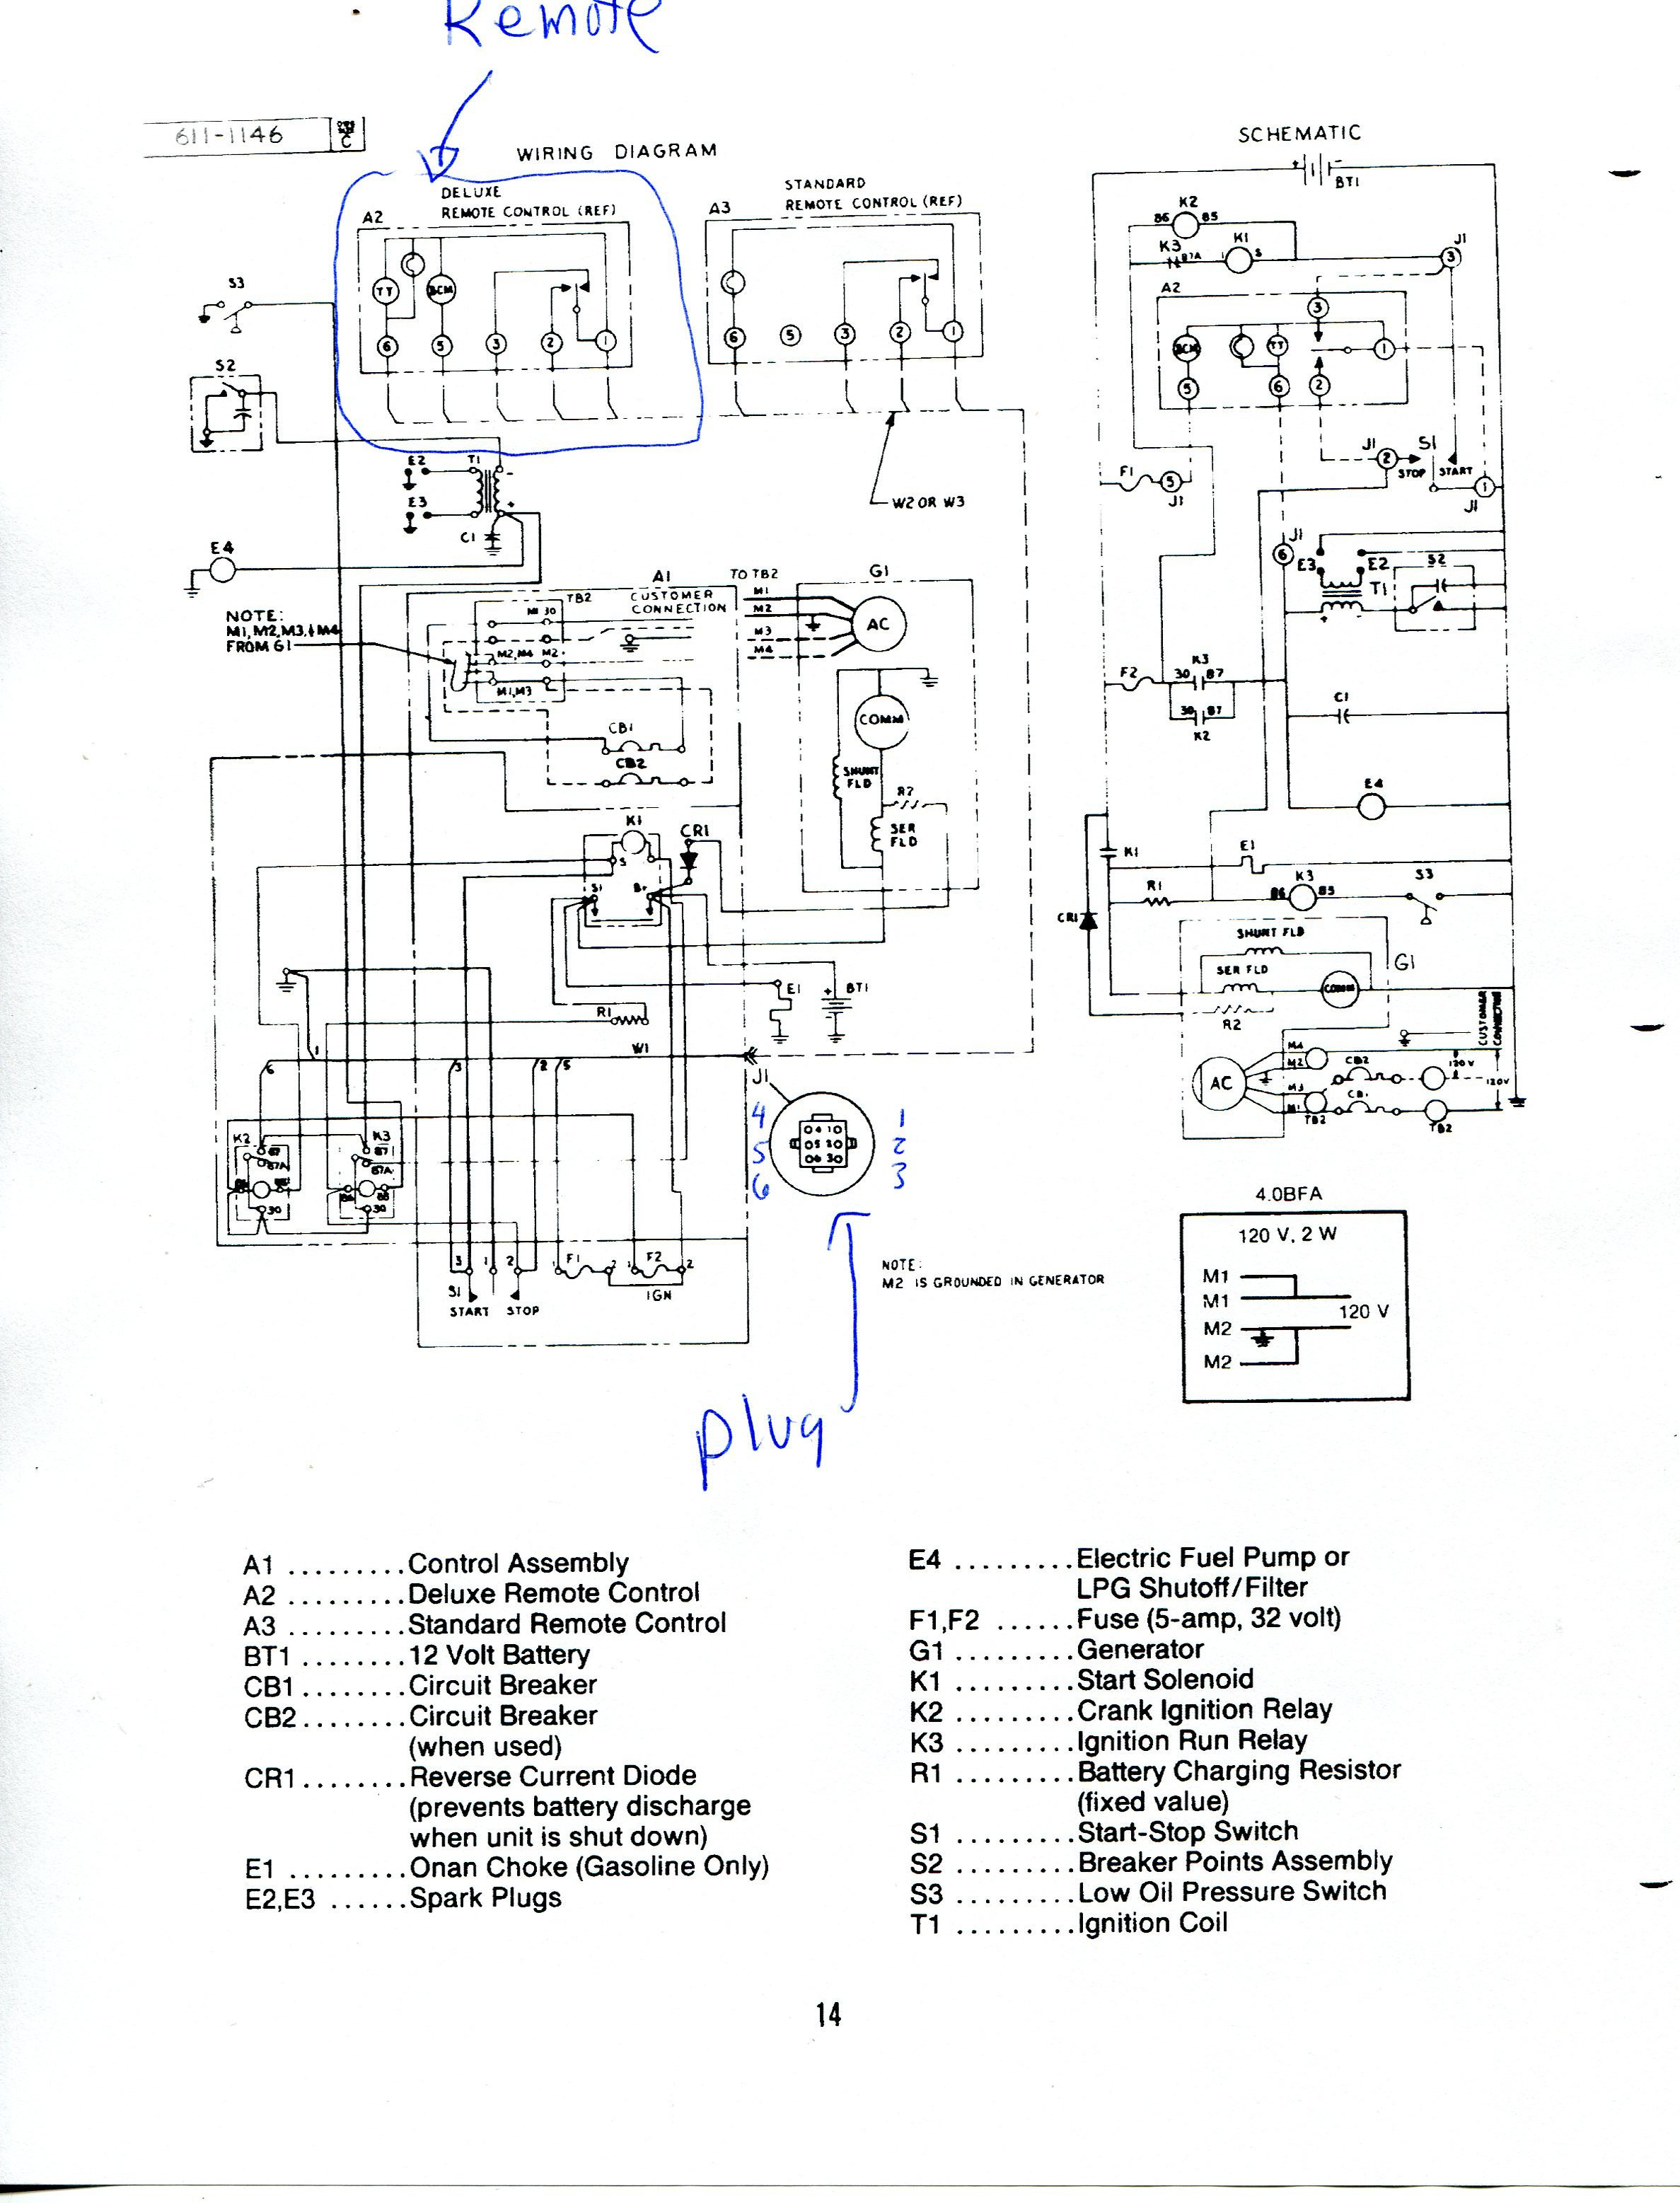 onan model 4bgefa261001 wiring manual